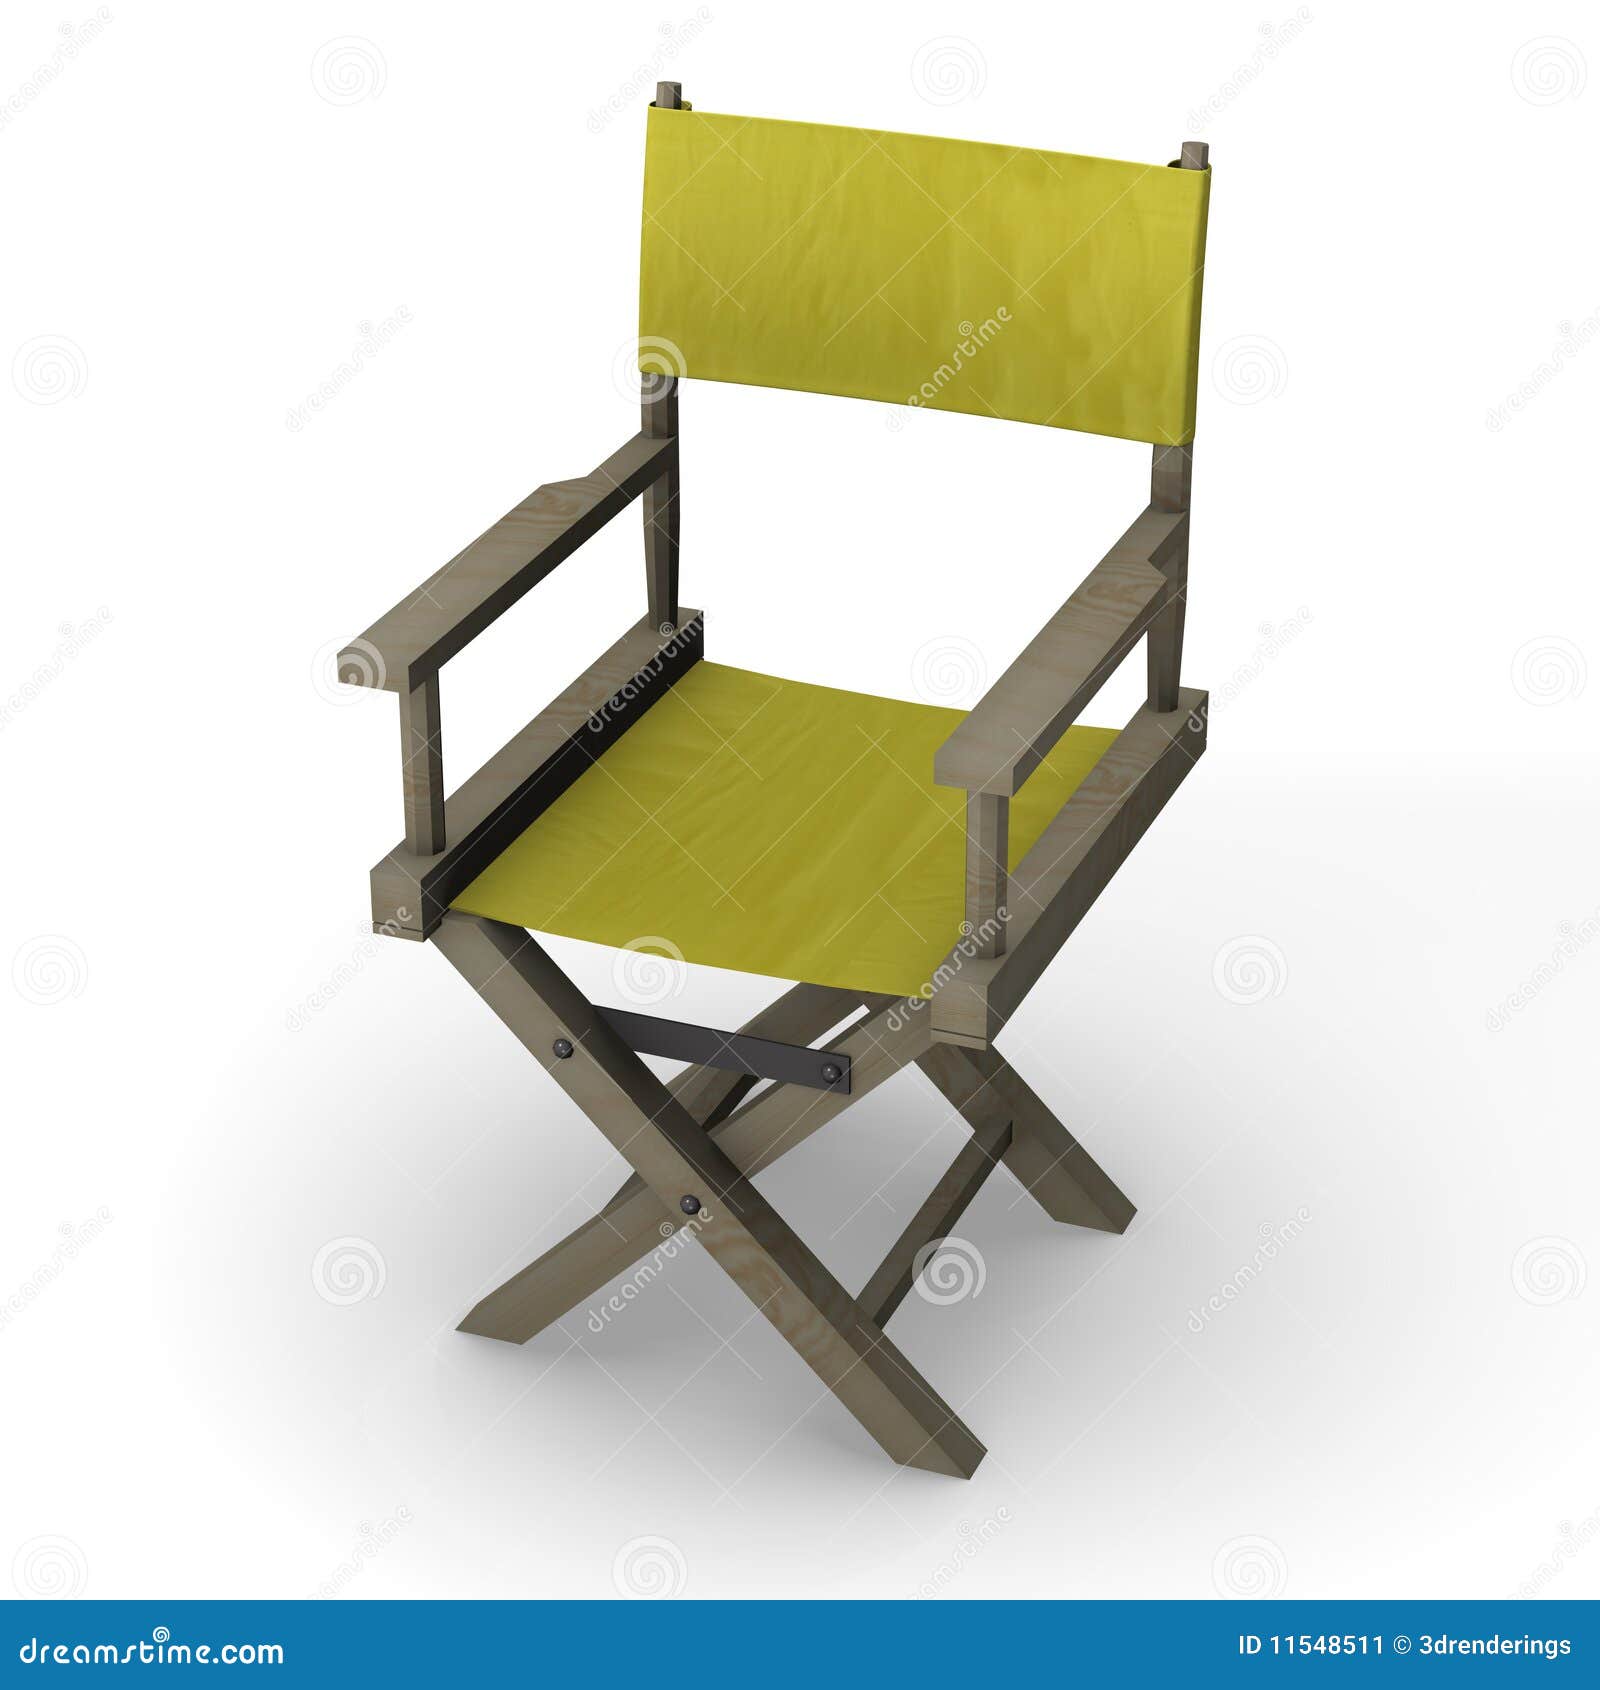 directorÃ¯Â¿Â½s chair